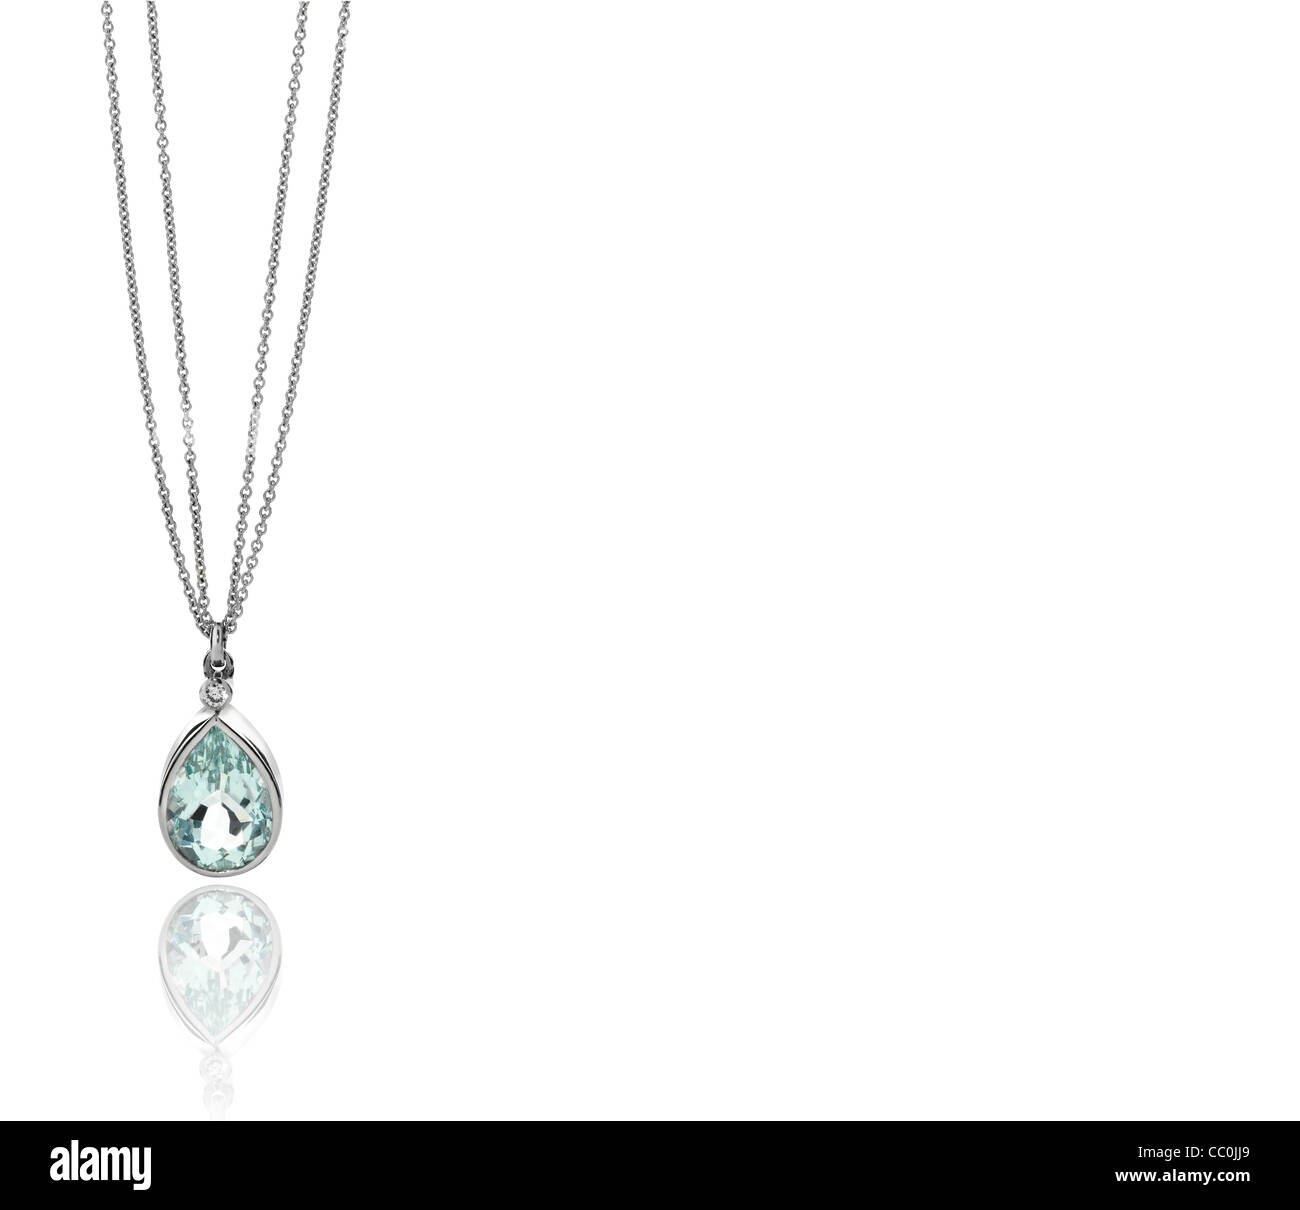 Aquamarine pendant on double white gold chain Stock Photo